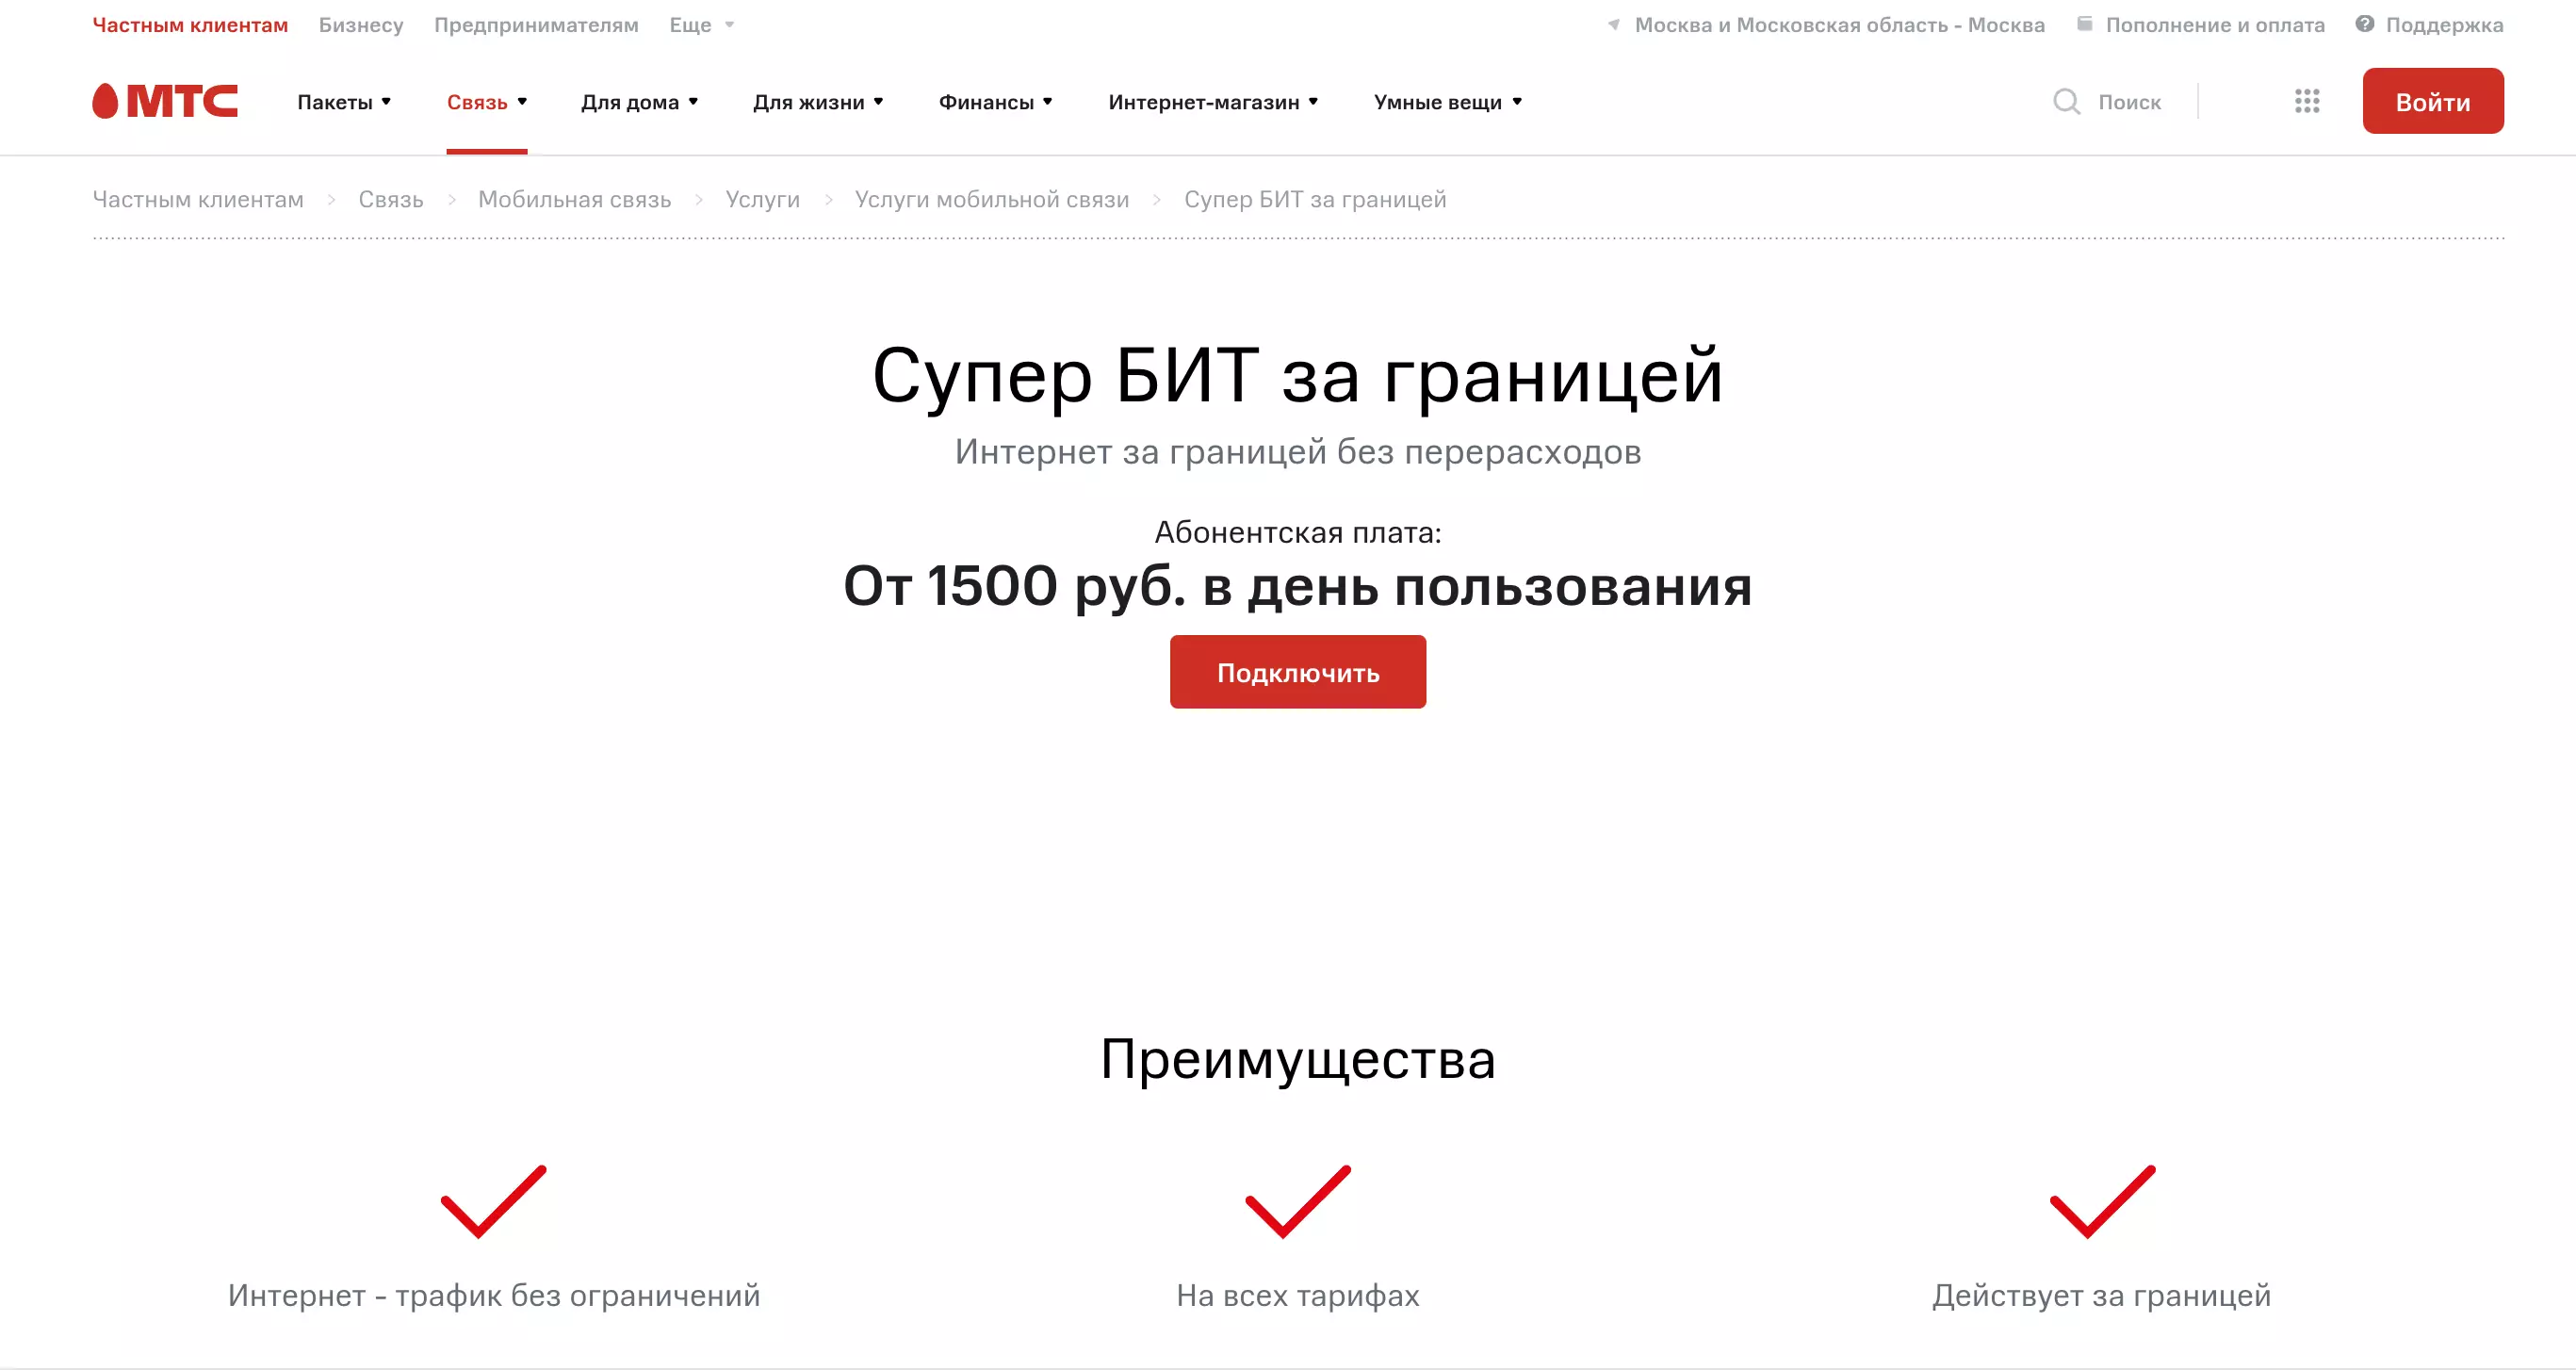 Цены и тарифы МТс на роуминг в Беларуси